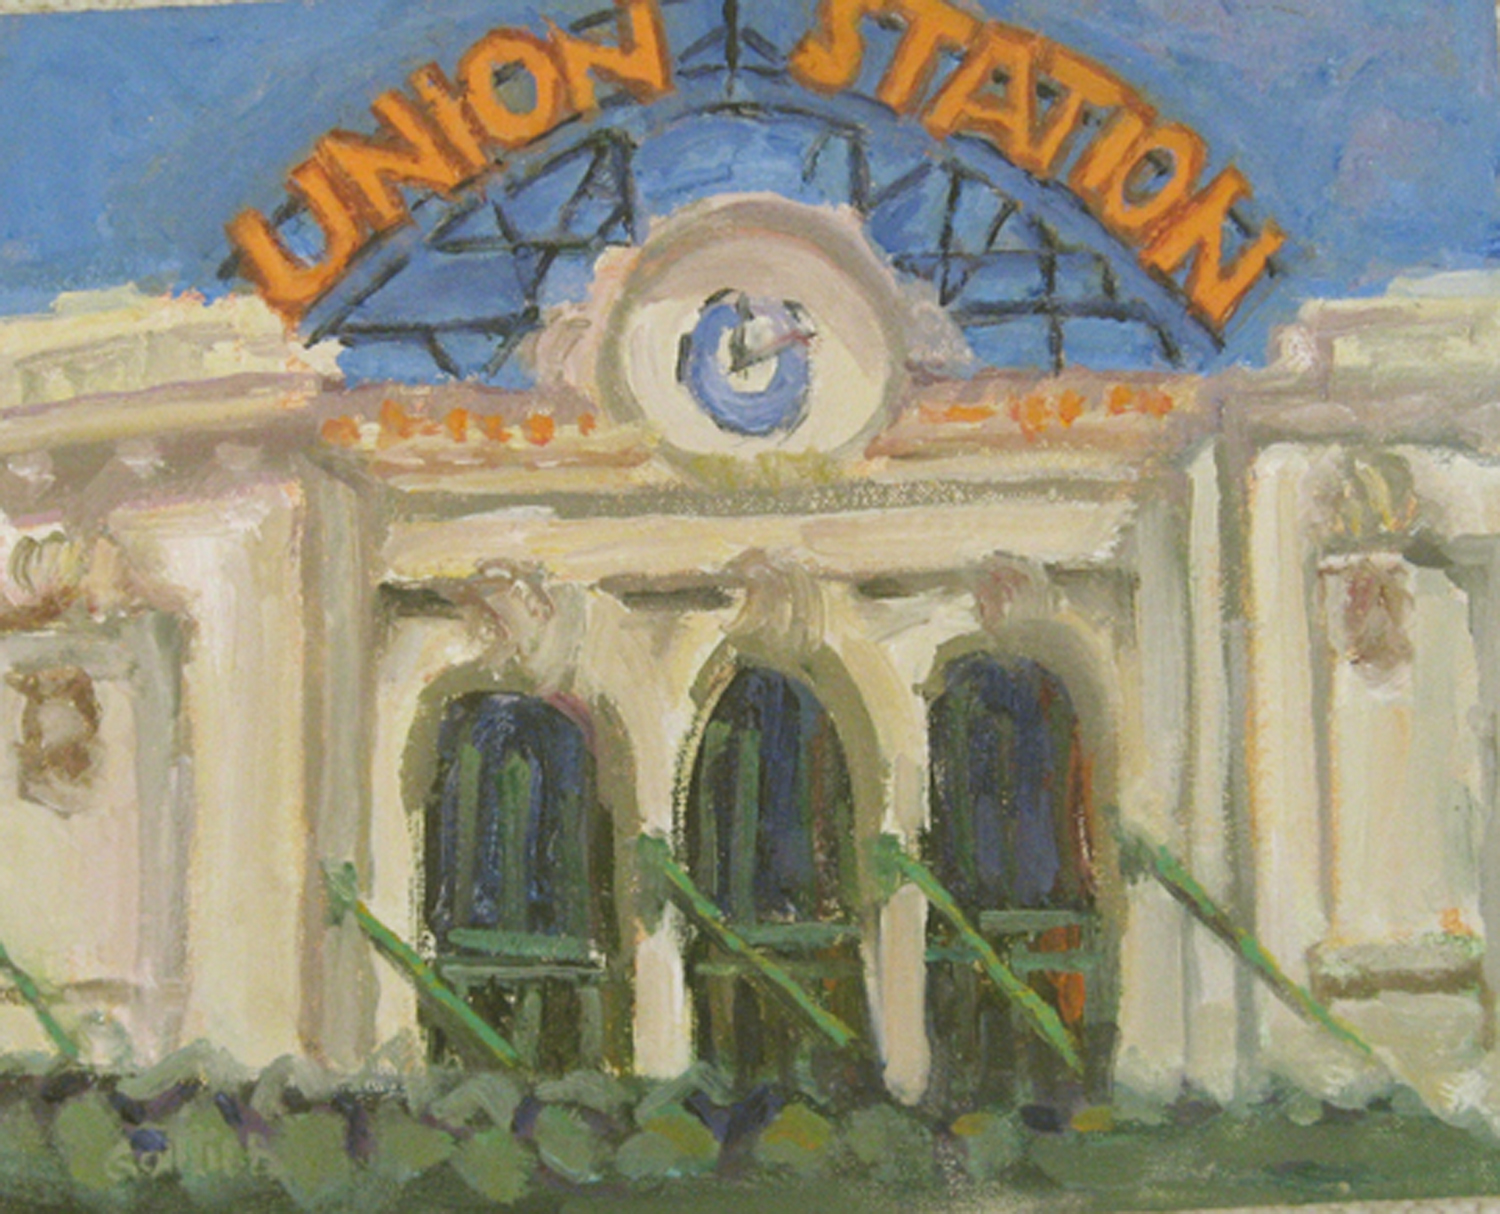 Union Station - 8 x 10